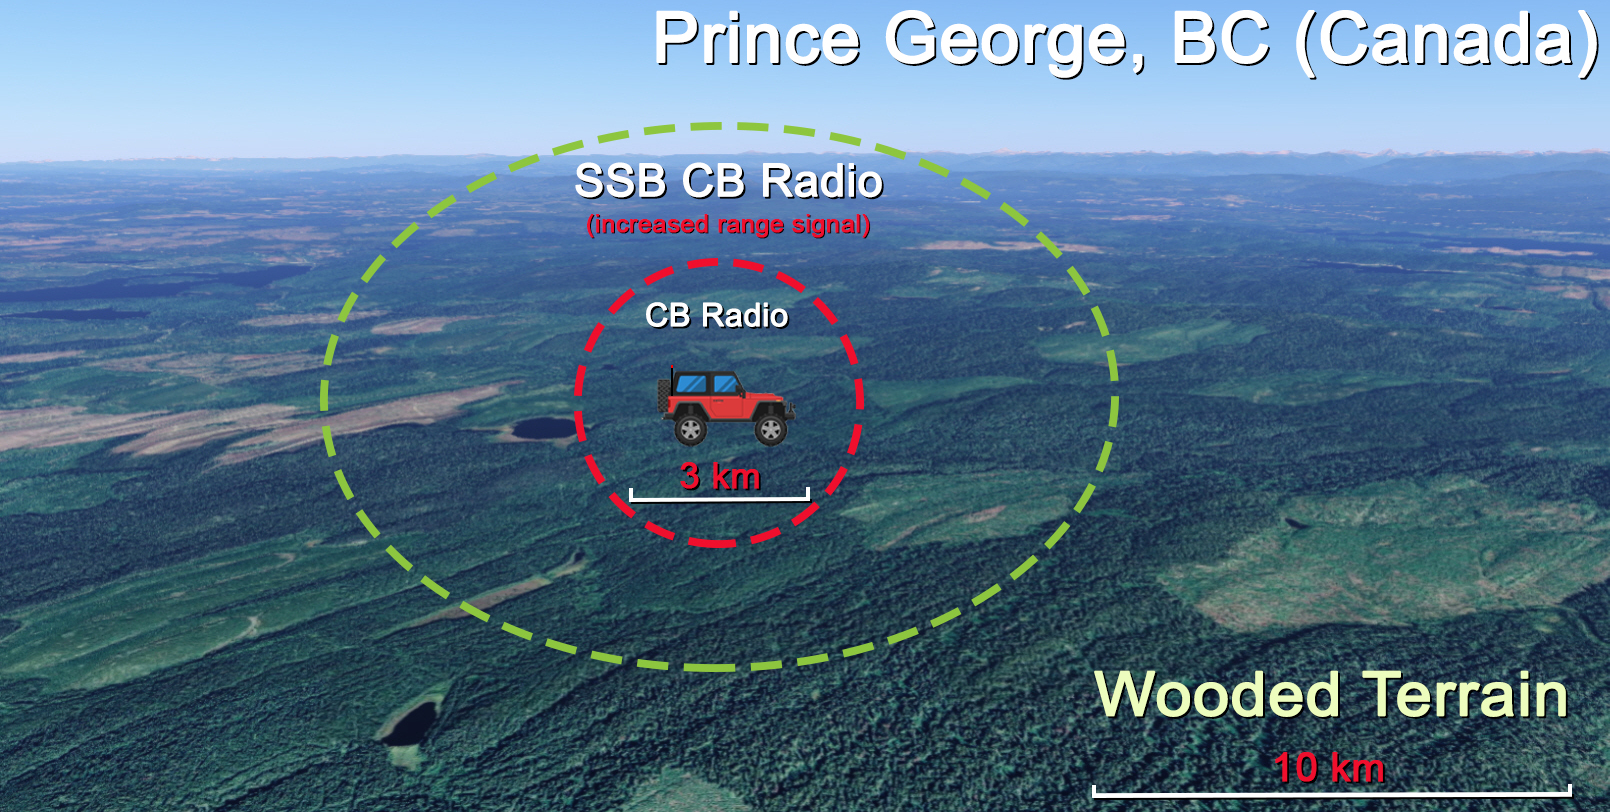 SSB CB Radio Maximum Range Wooded Terrain